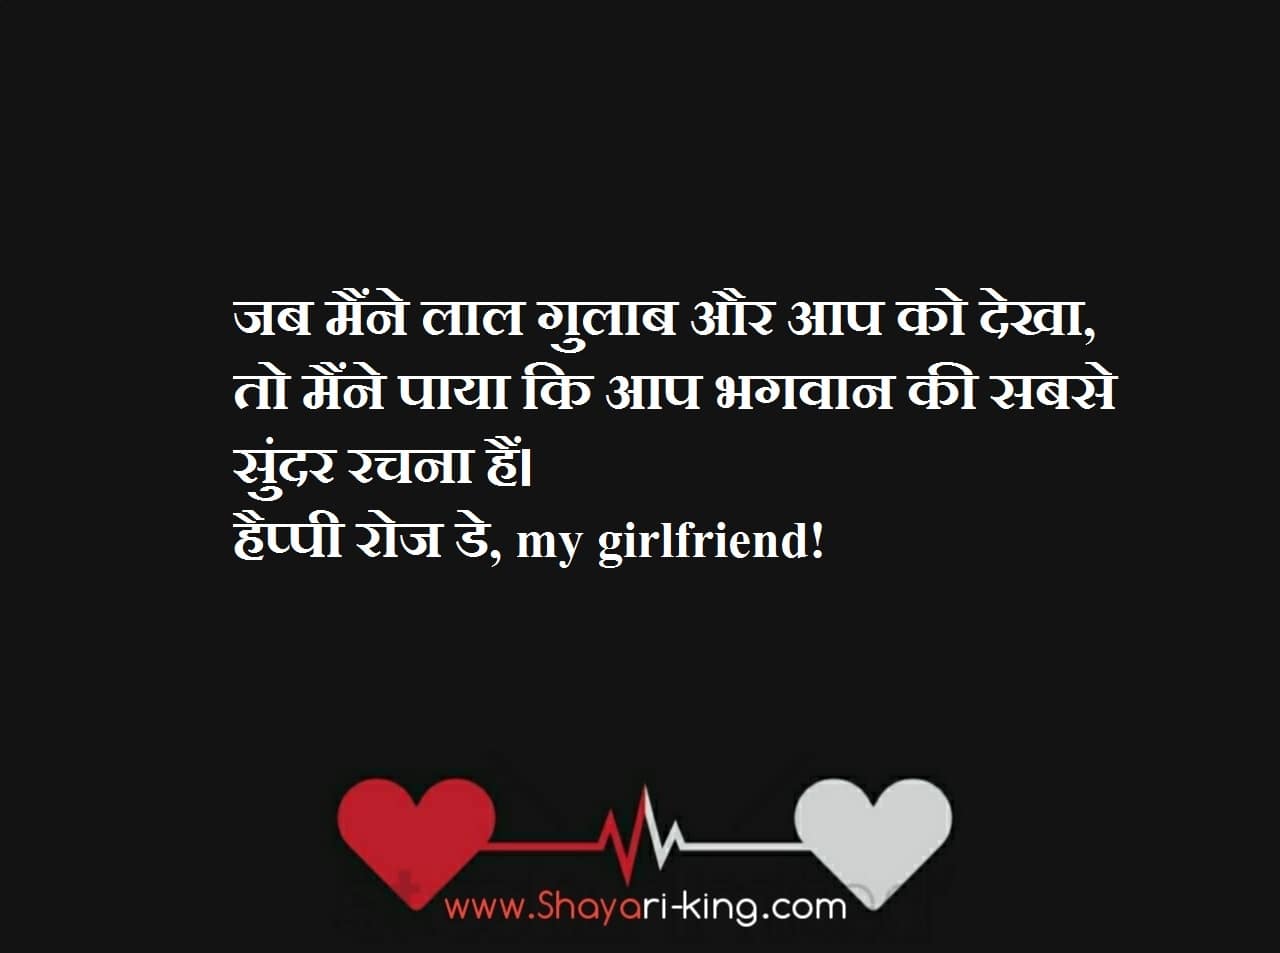 Rose day quotes shayari in hindi